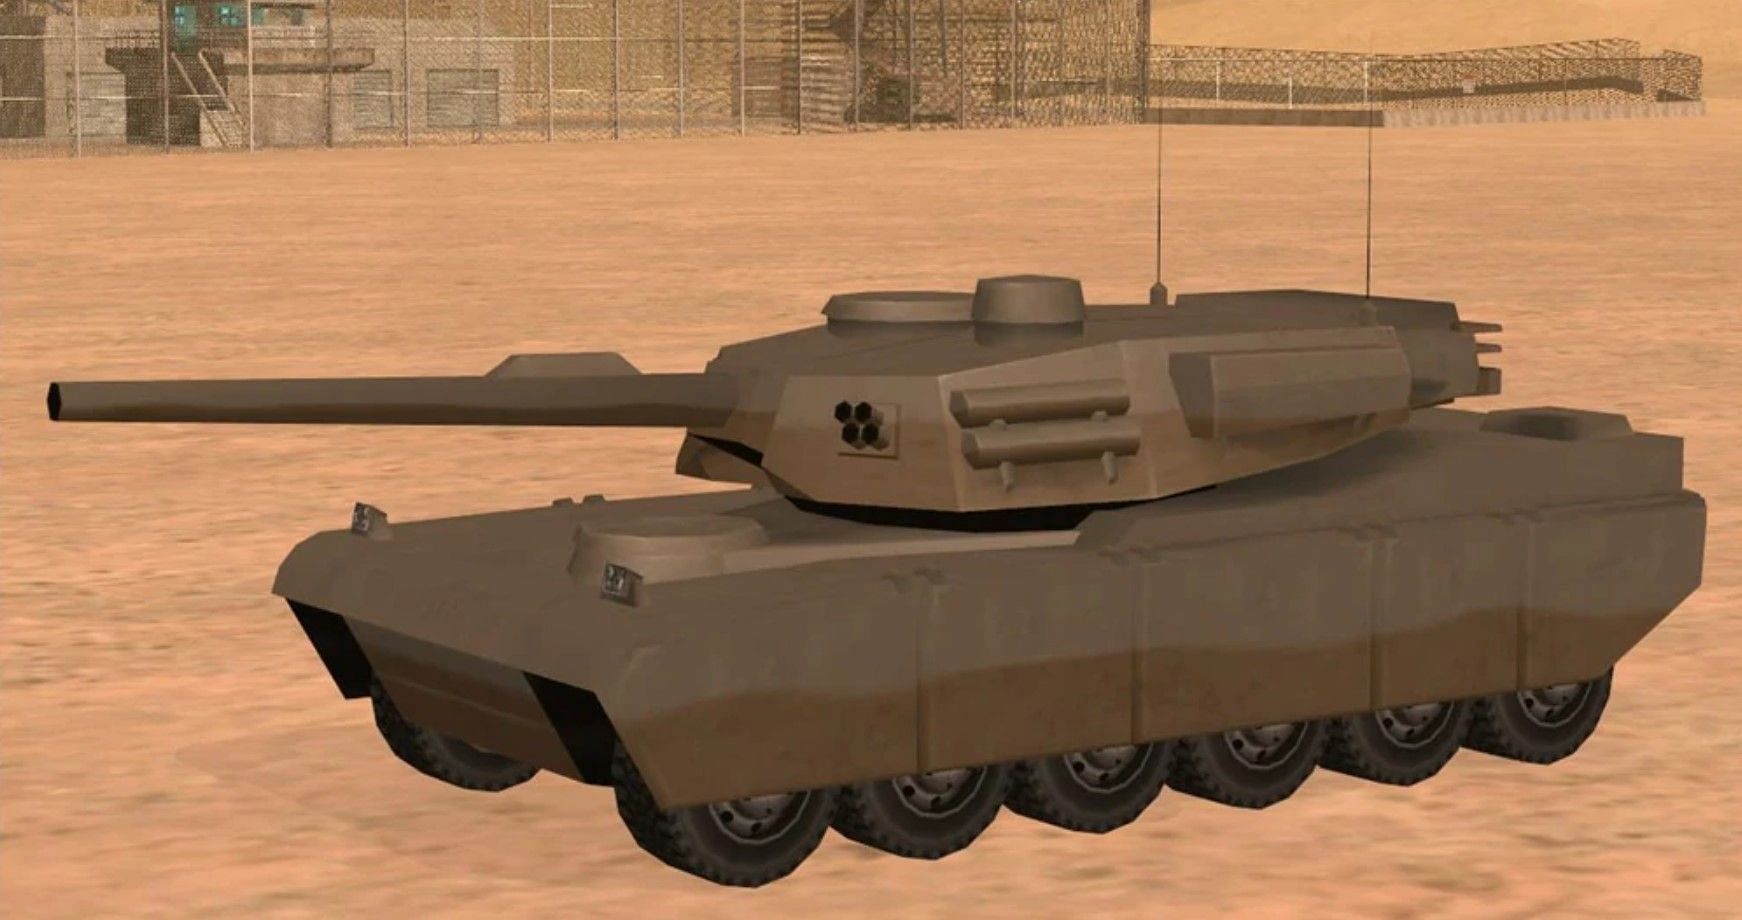 A Rhino Tank near Area 69 in GTA San Andreas (Image via Rockstar Games)